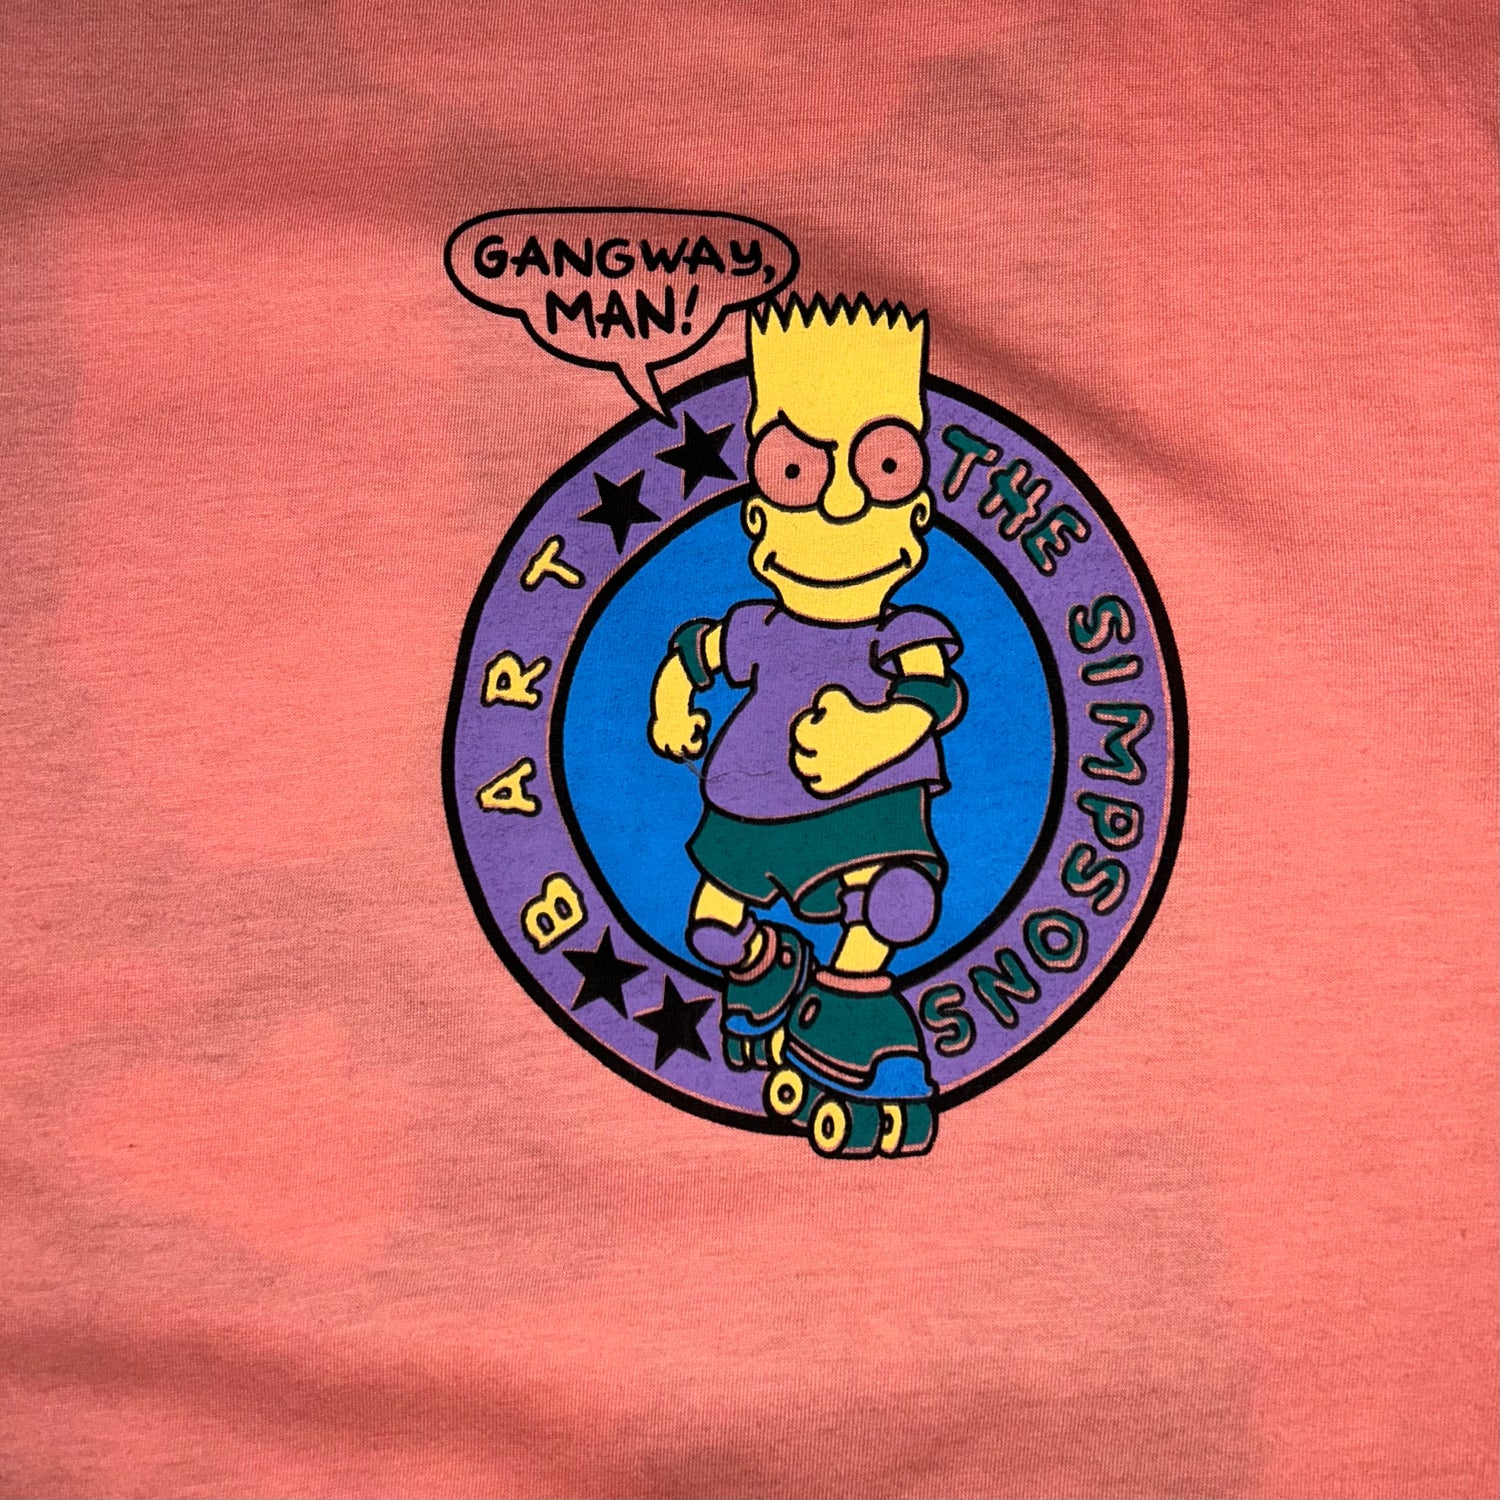 T-shirt Bart Simpson Gangway Man  (L)